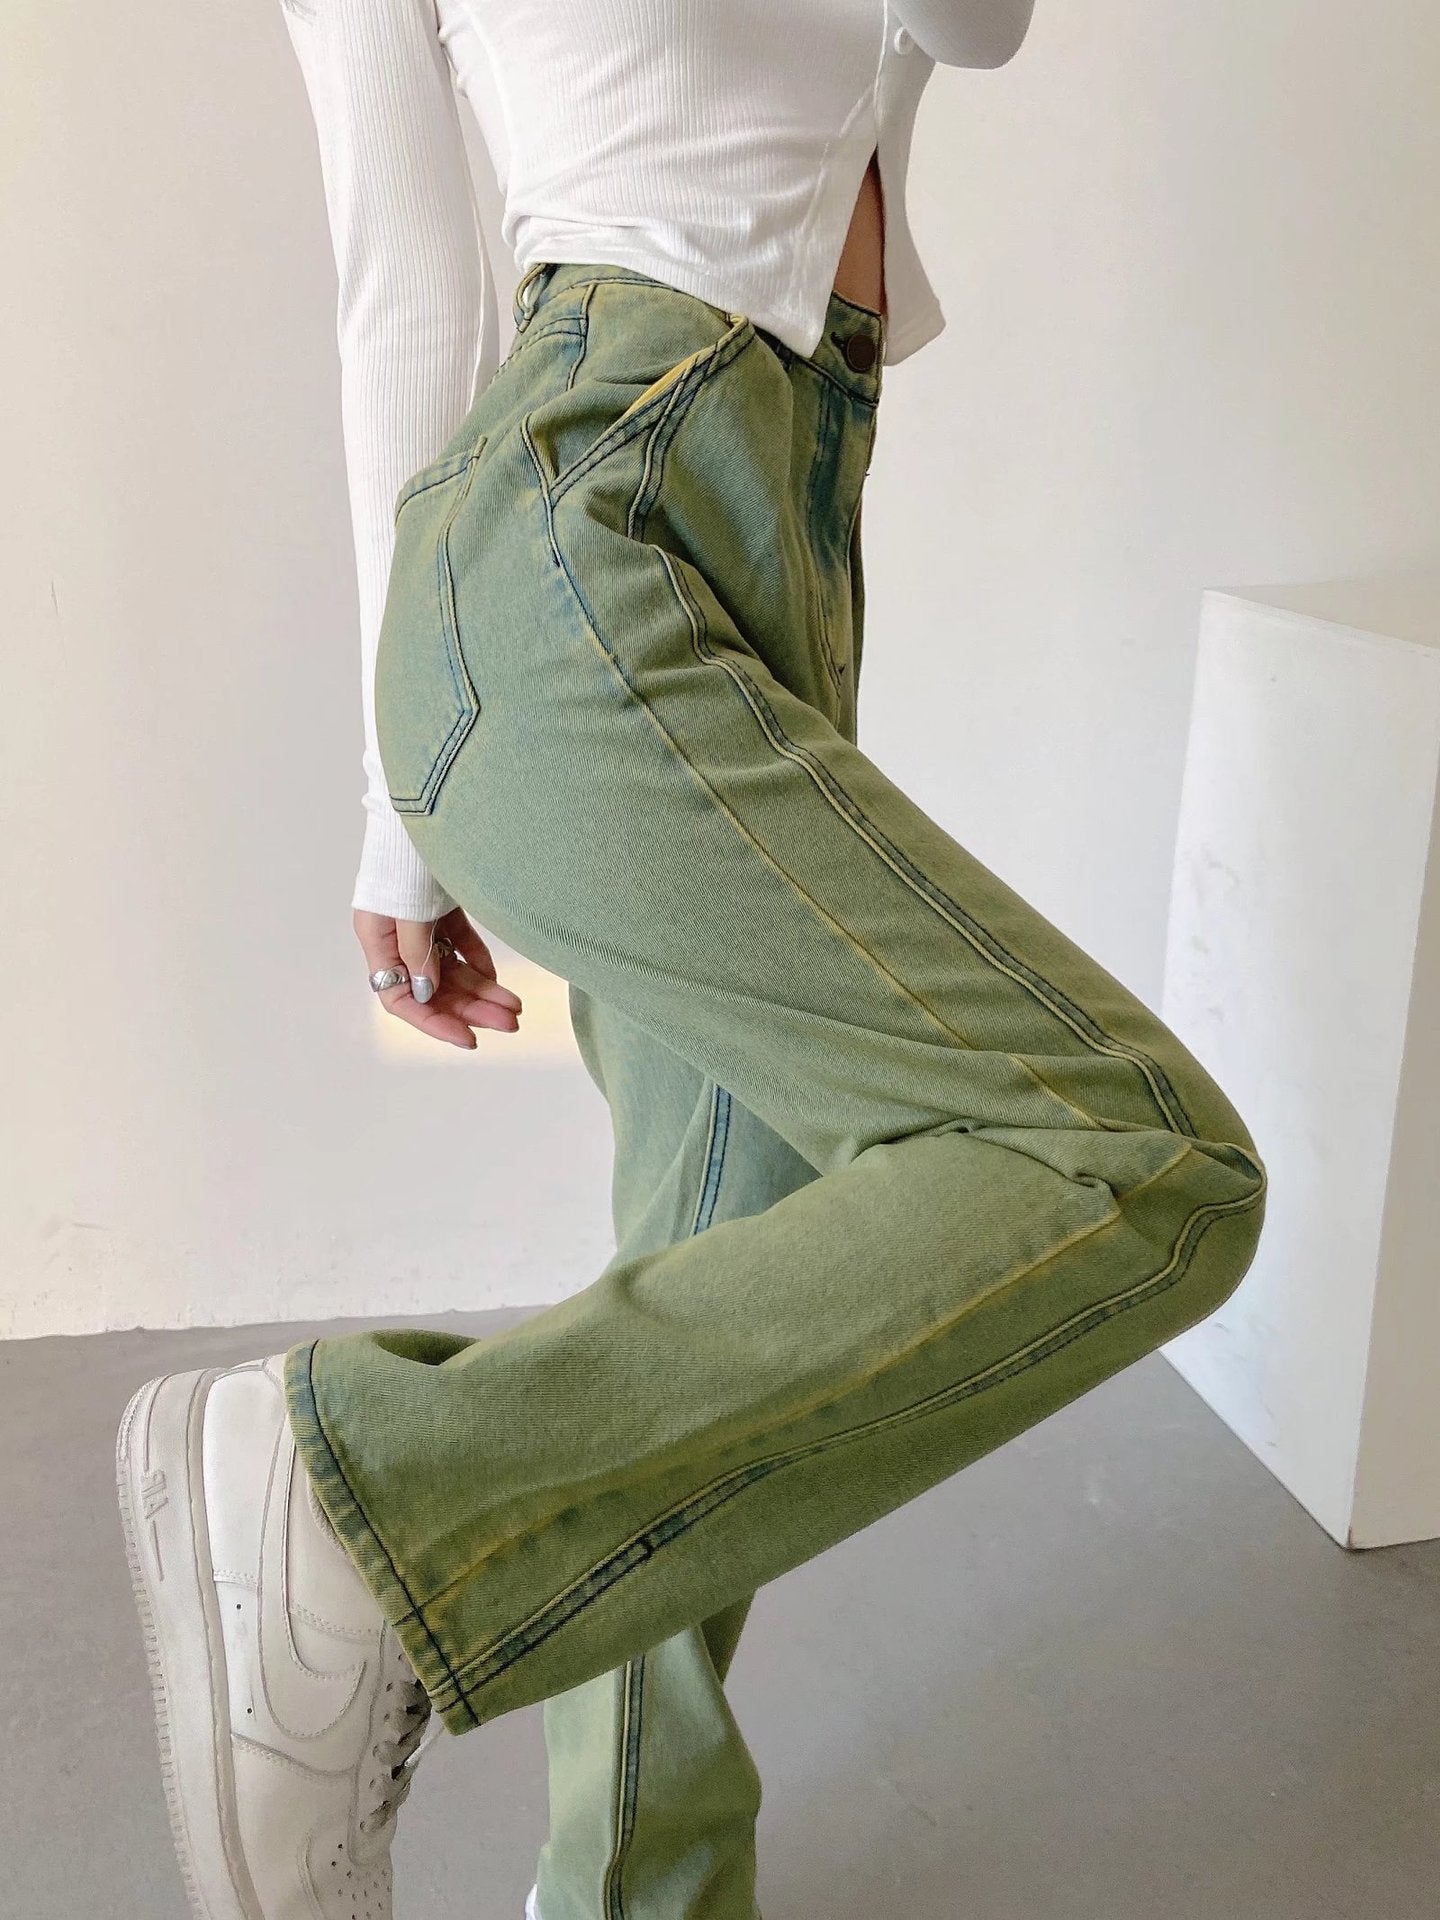 Fashion Personality Green Jeans Woman